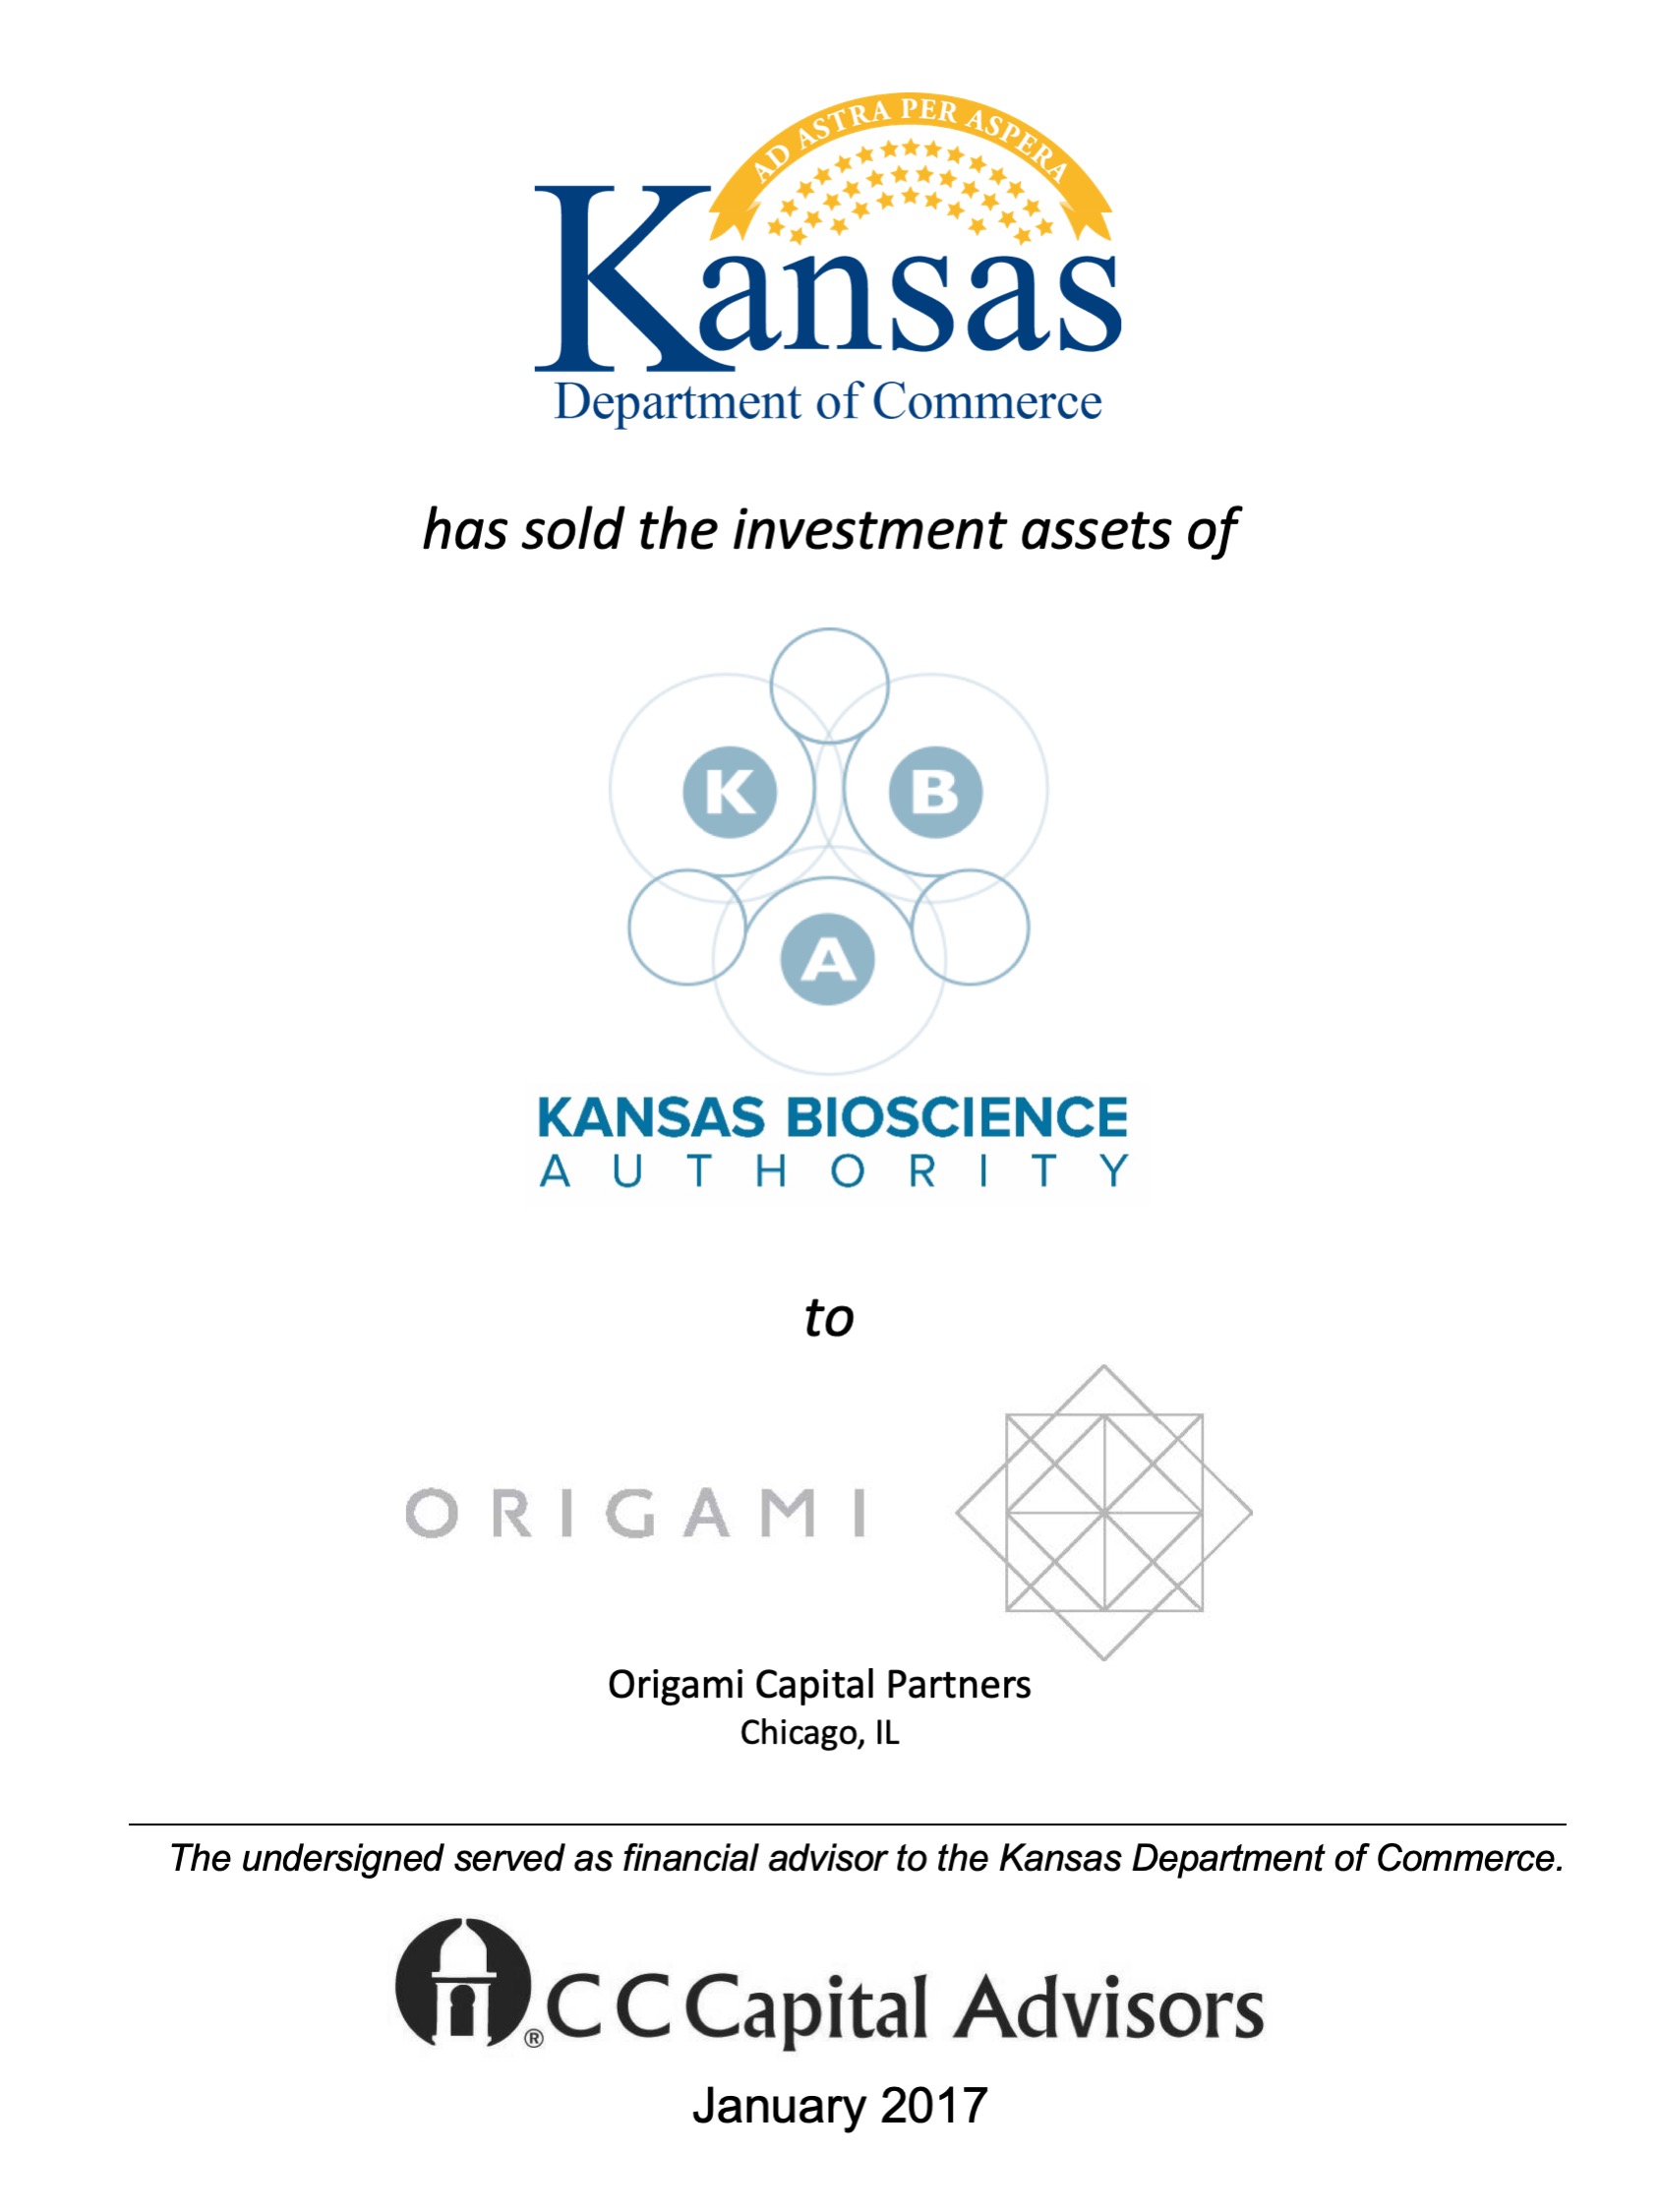 Kansas Bioscience transaction